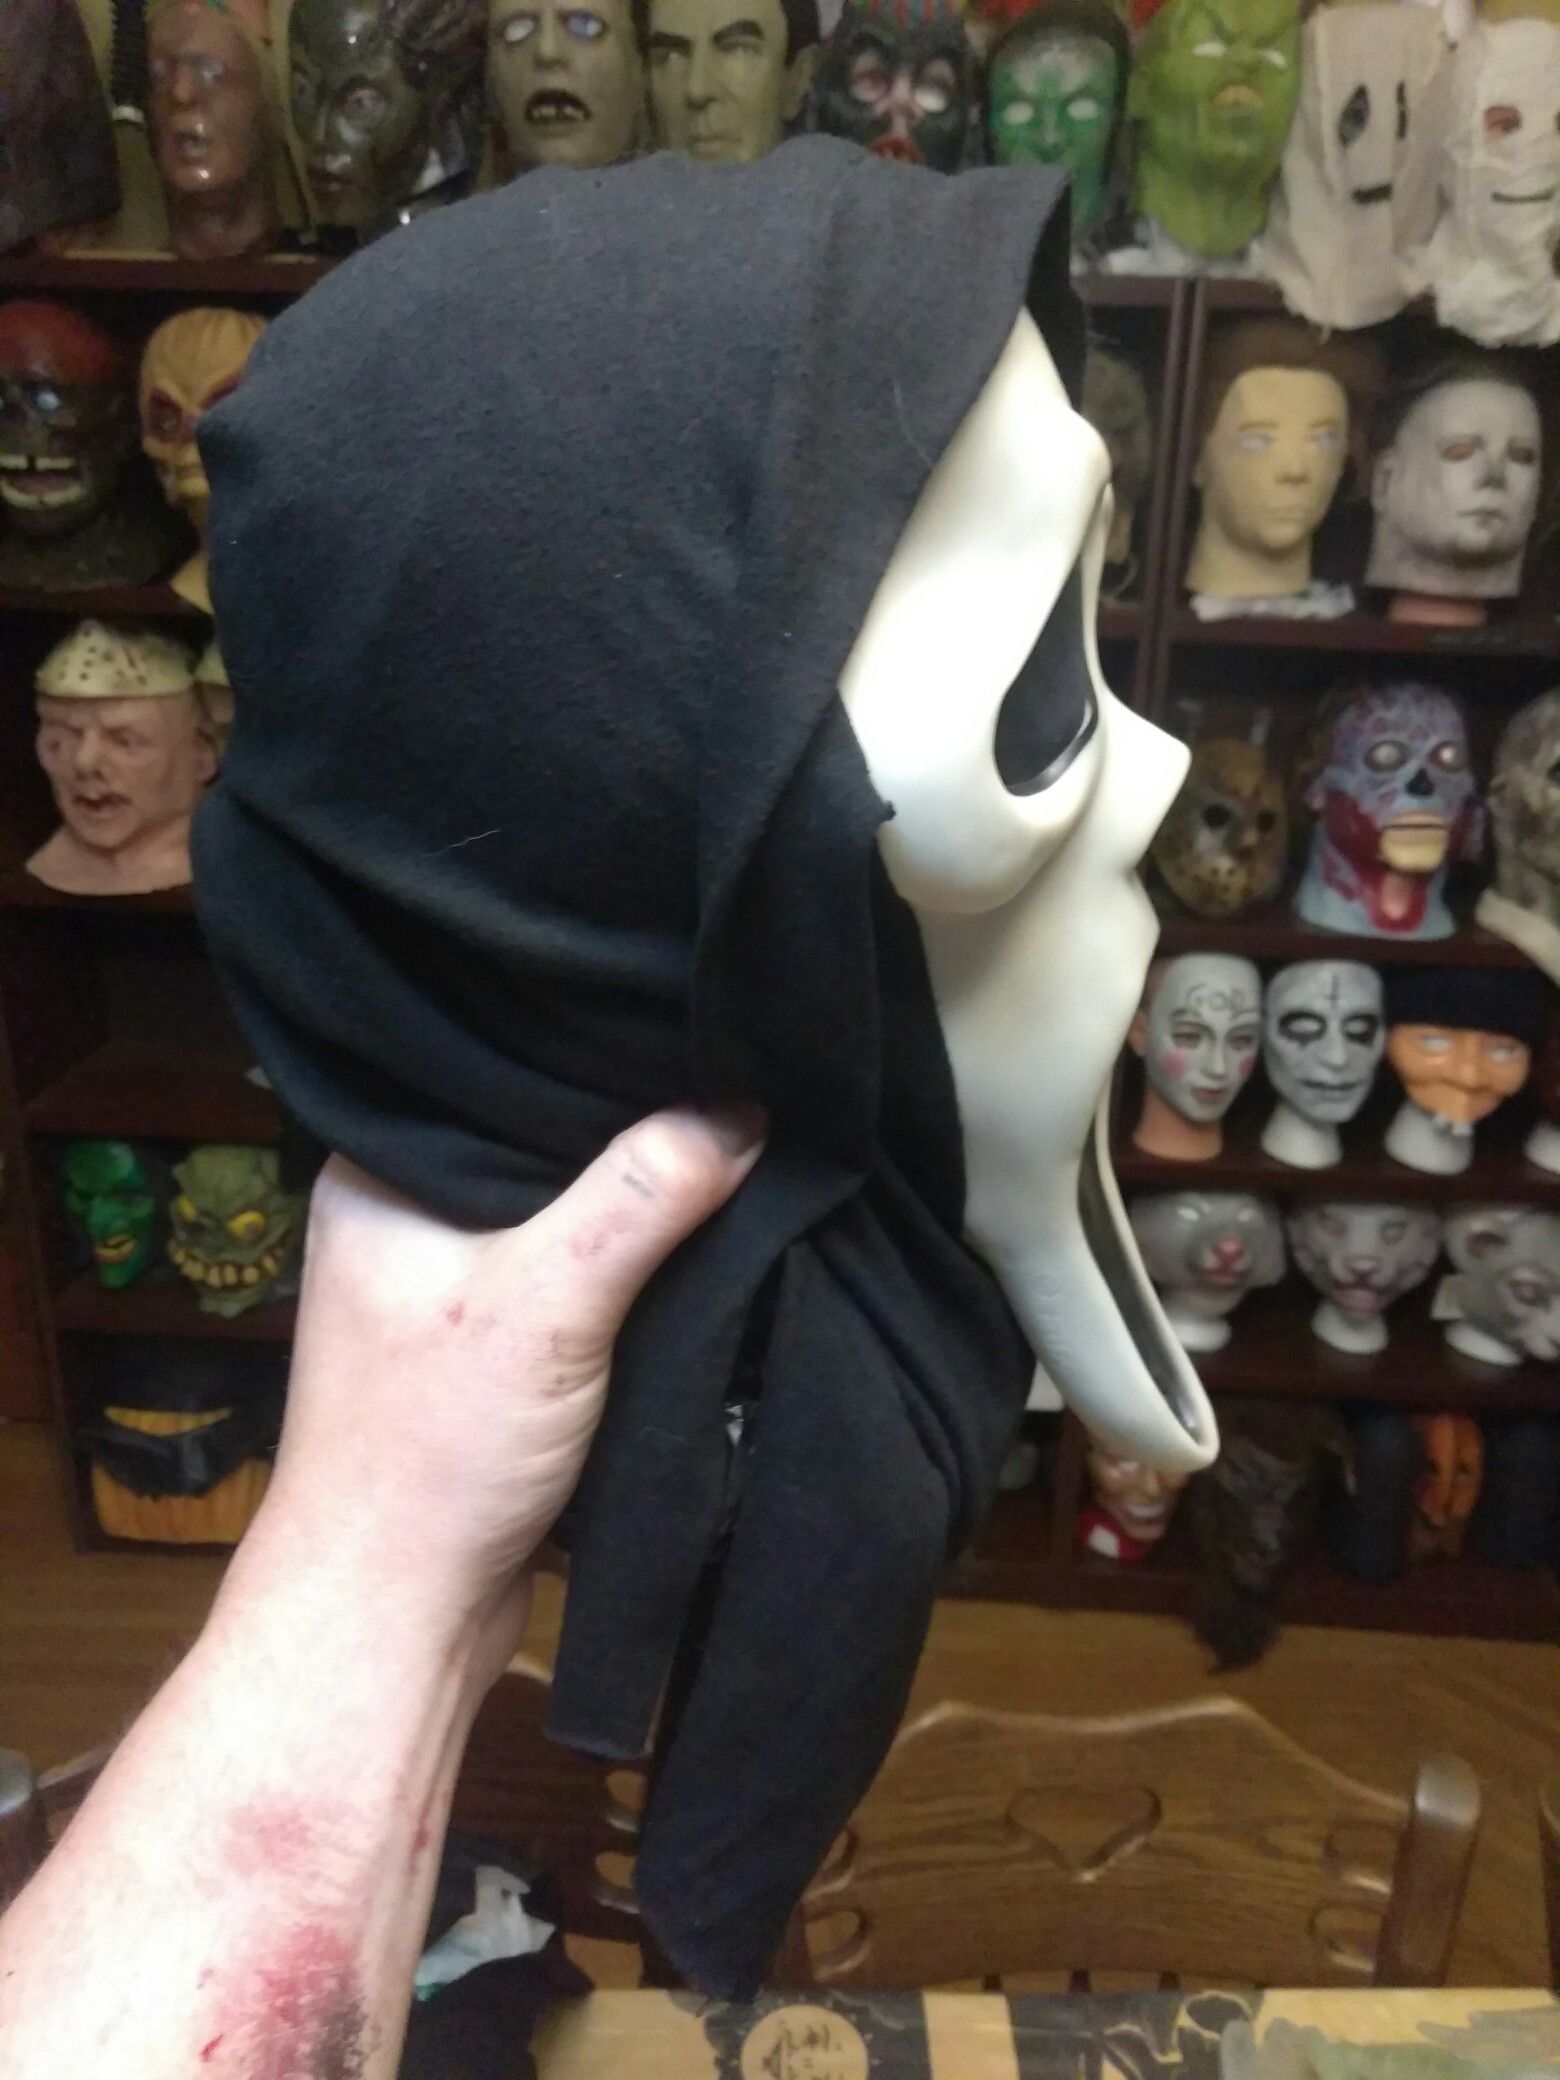 Fantastic Faces Ghostface Gen 2 Halloween mask for Sale in Elgin, IL ...